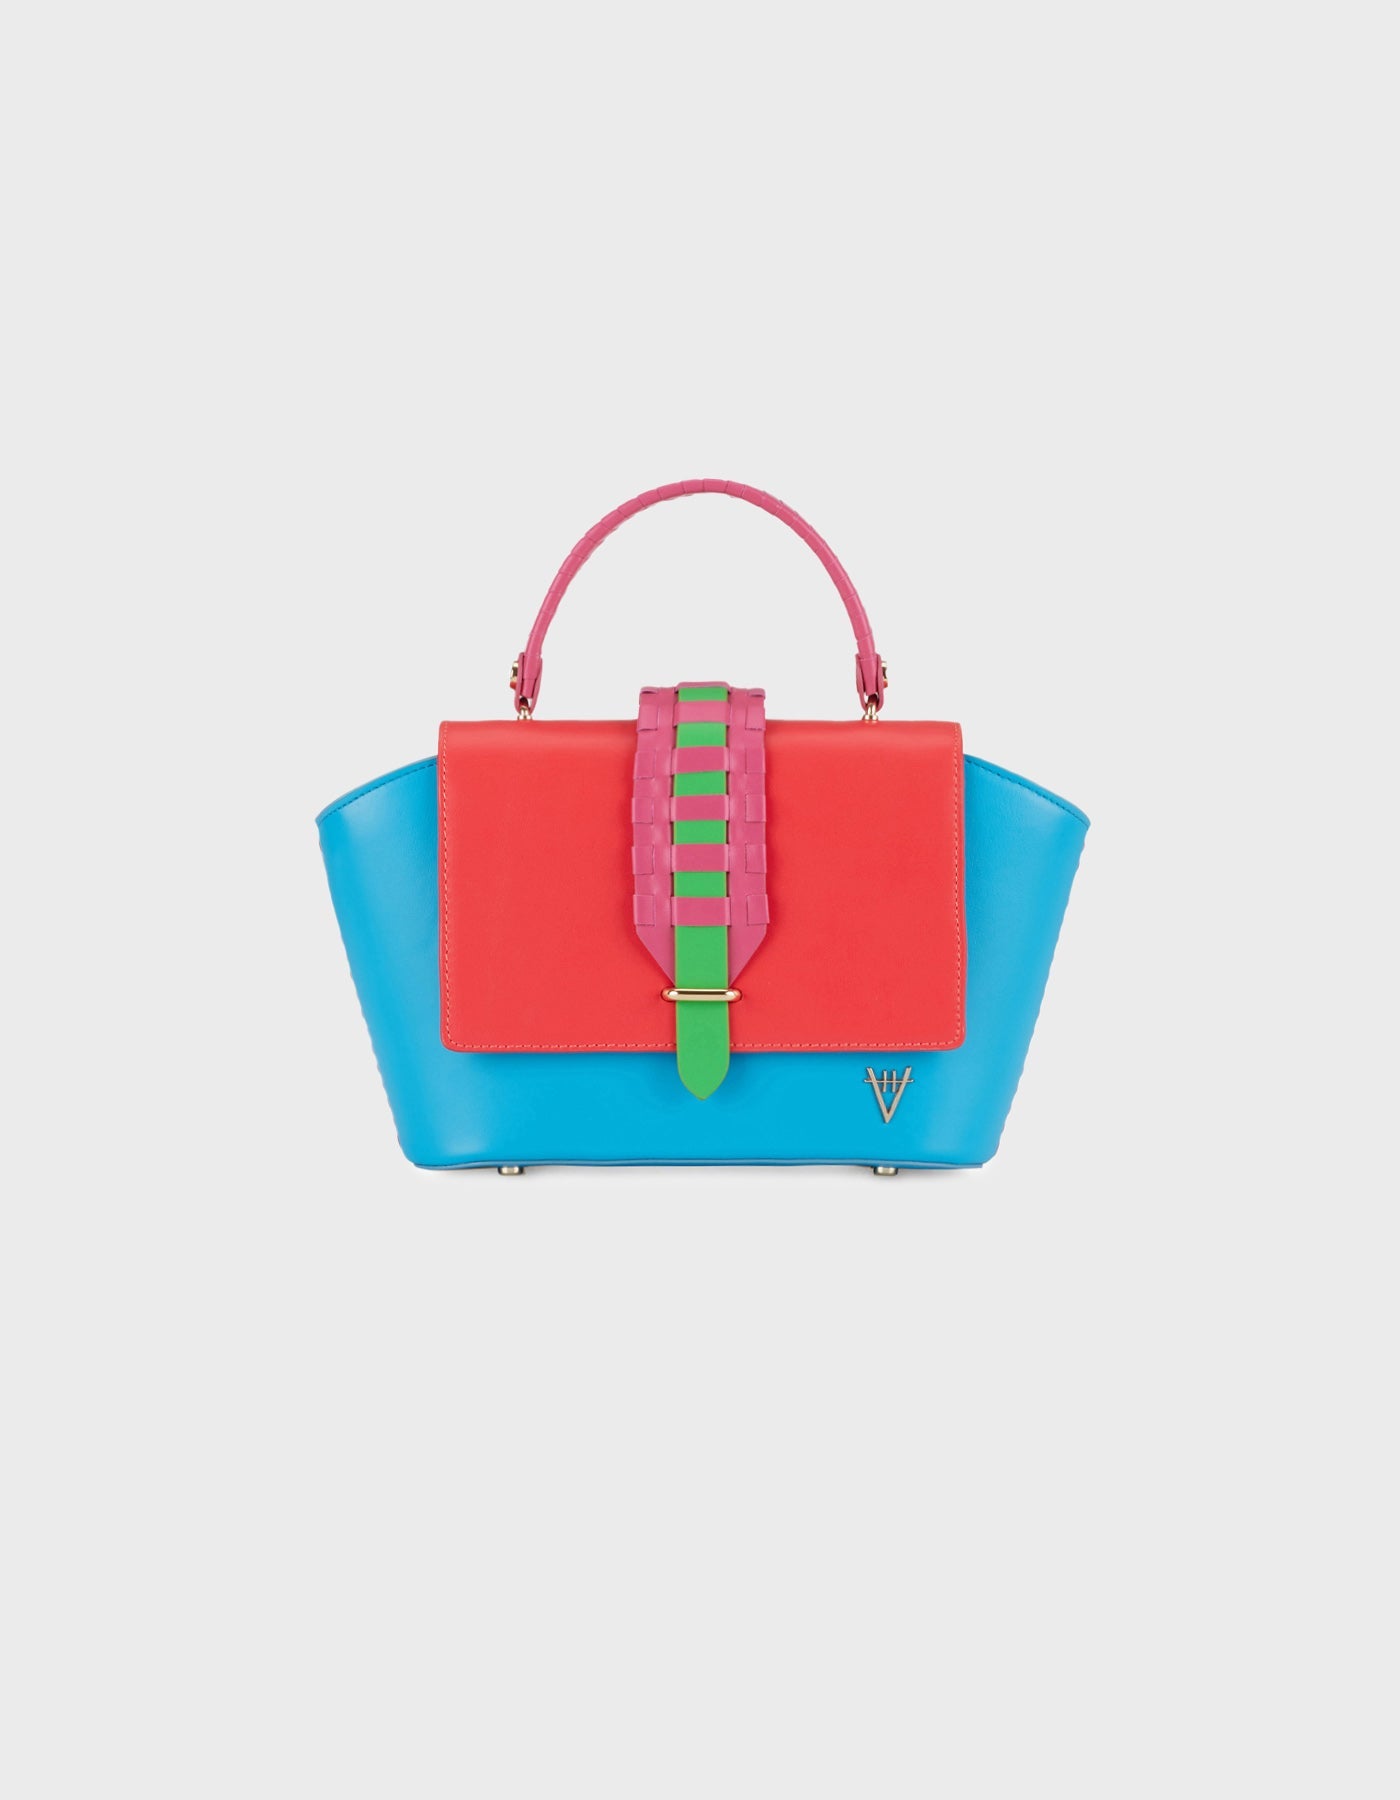 HiVa Atelier | Ventus Shoulder Bag Sky Blue & Fuchsia & Green & Coral | Beautiful and Versatile